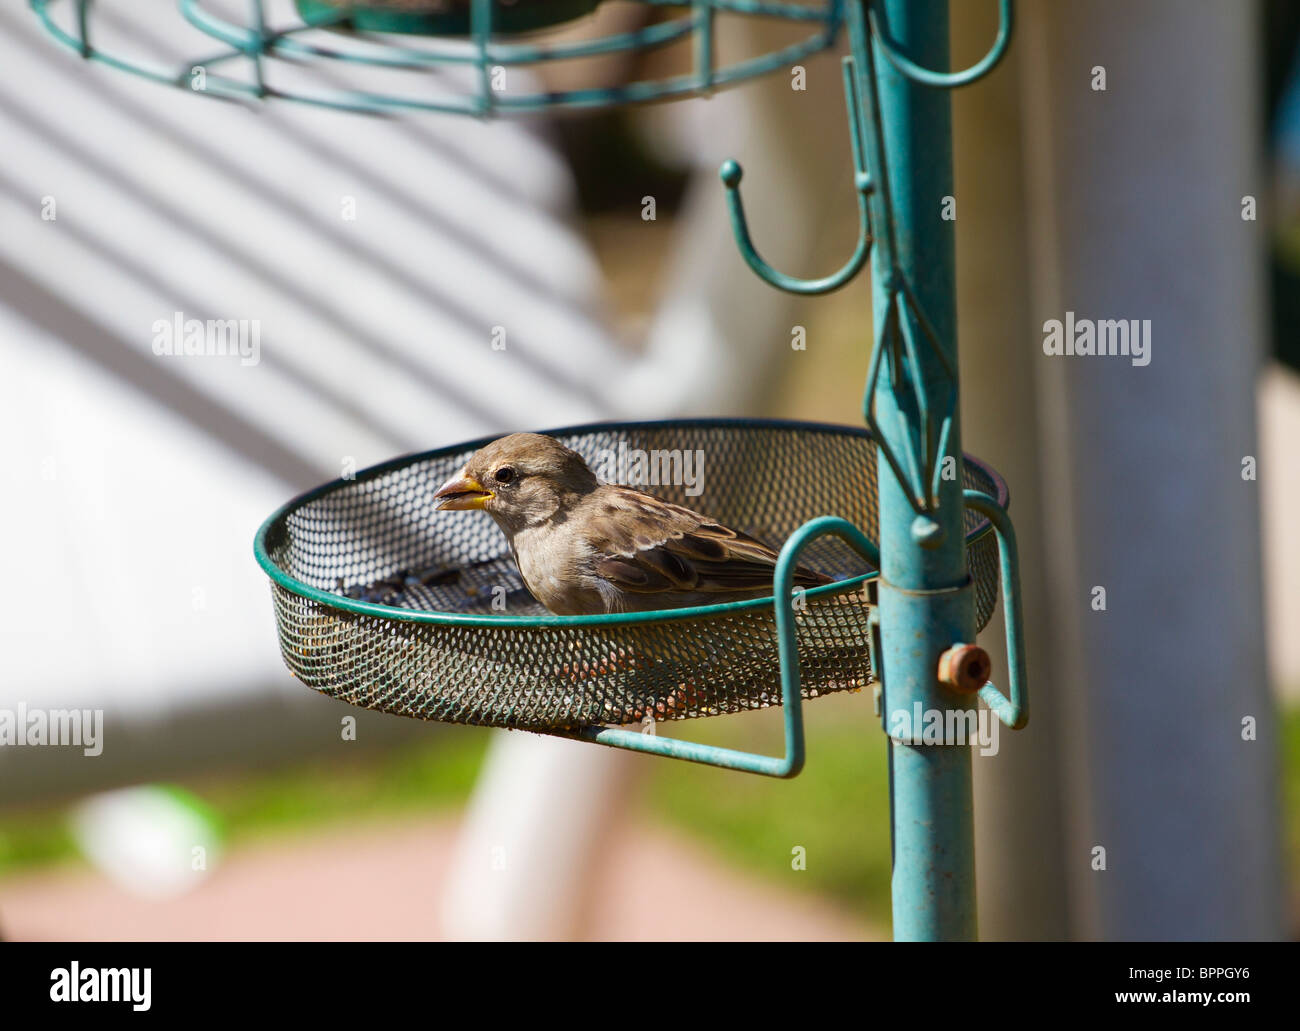 Female Greenfinch sitting in empty bird feeder Stock Photo